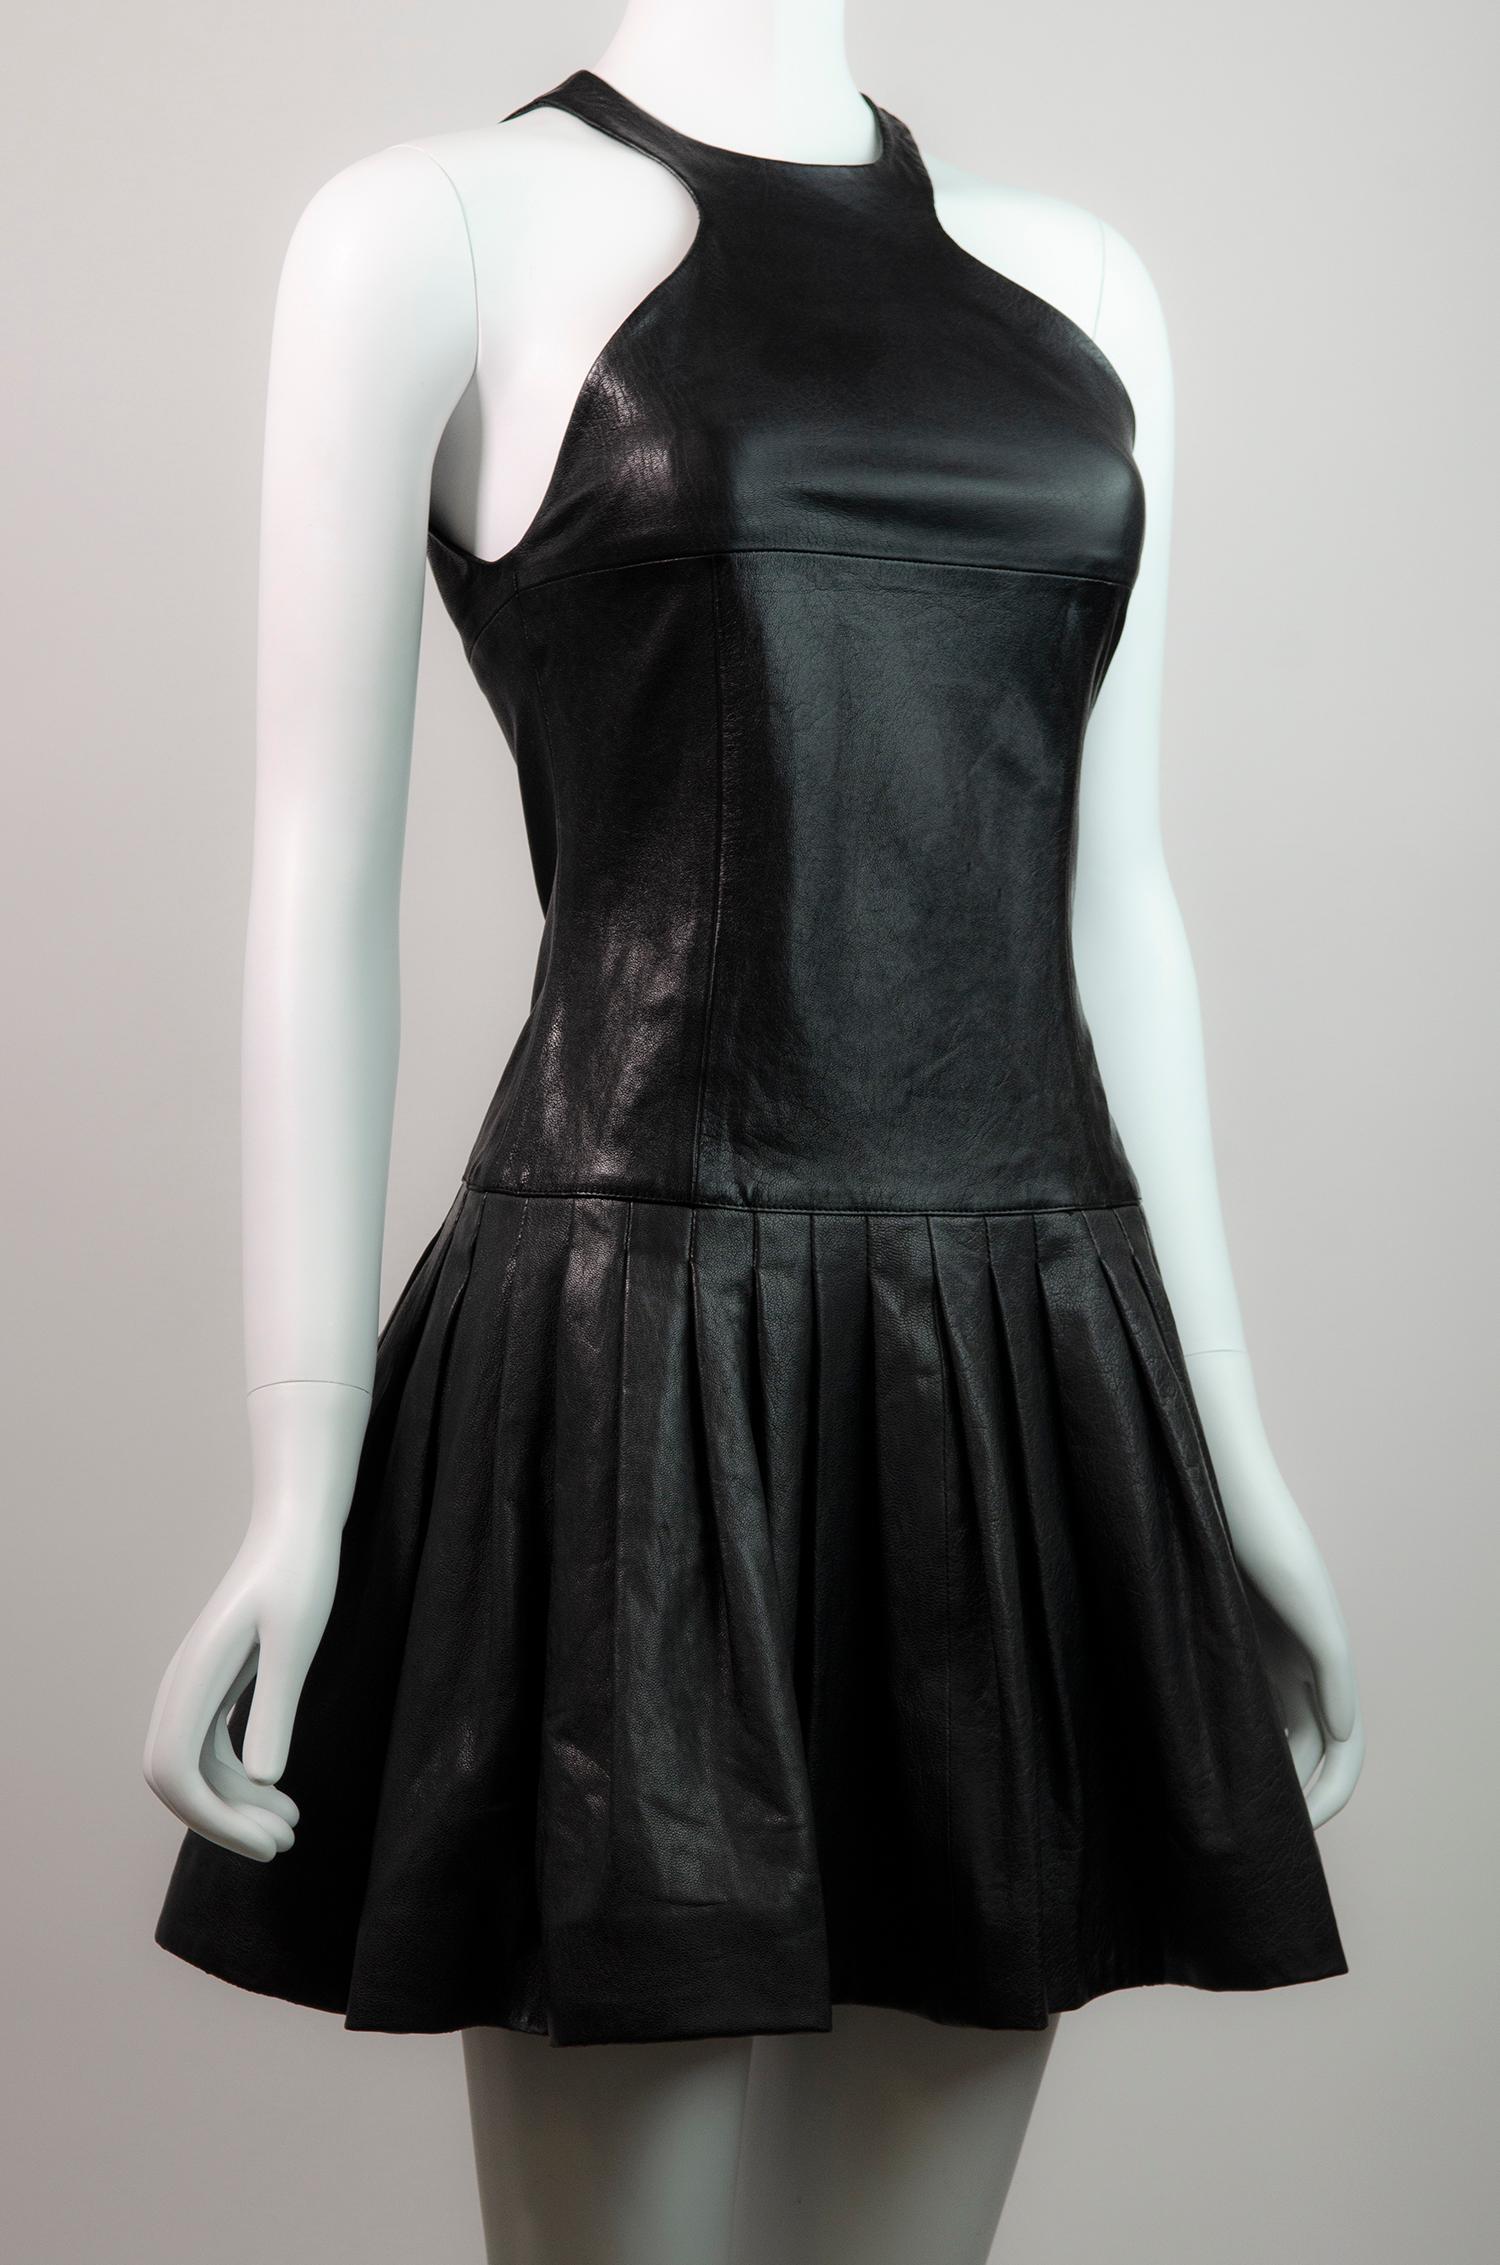 SAINT LAURENT BY HEDI SLIMANE 2014 Black Leather Mini Dress For Sale 6